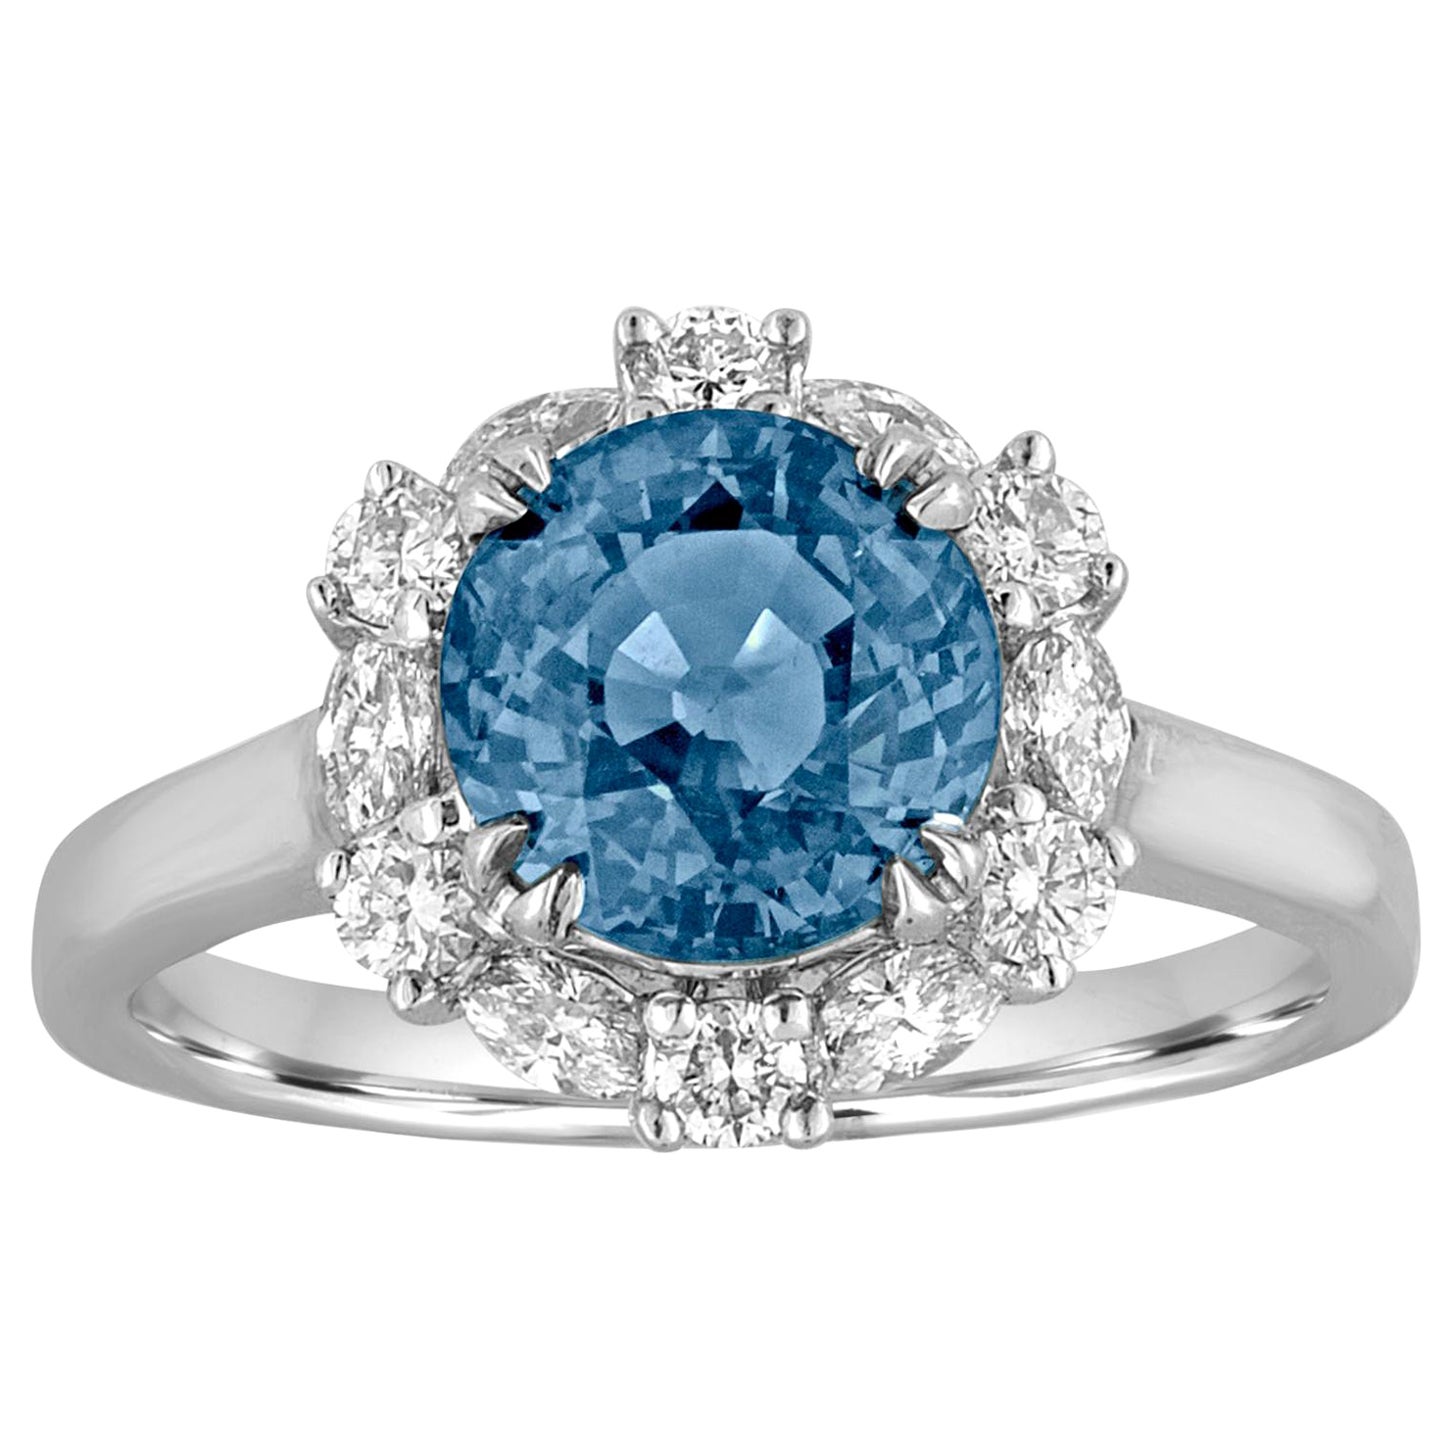 Certified No Heat 2.97 Carat Sky Blue Sapphire Halo Diamond Ring For Sale